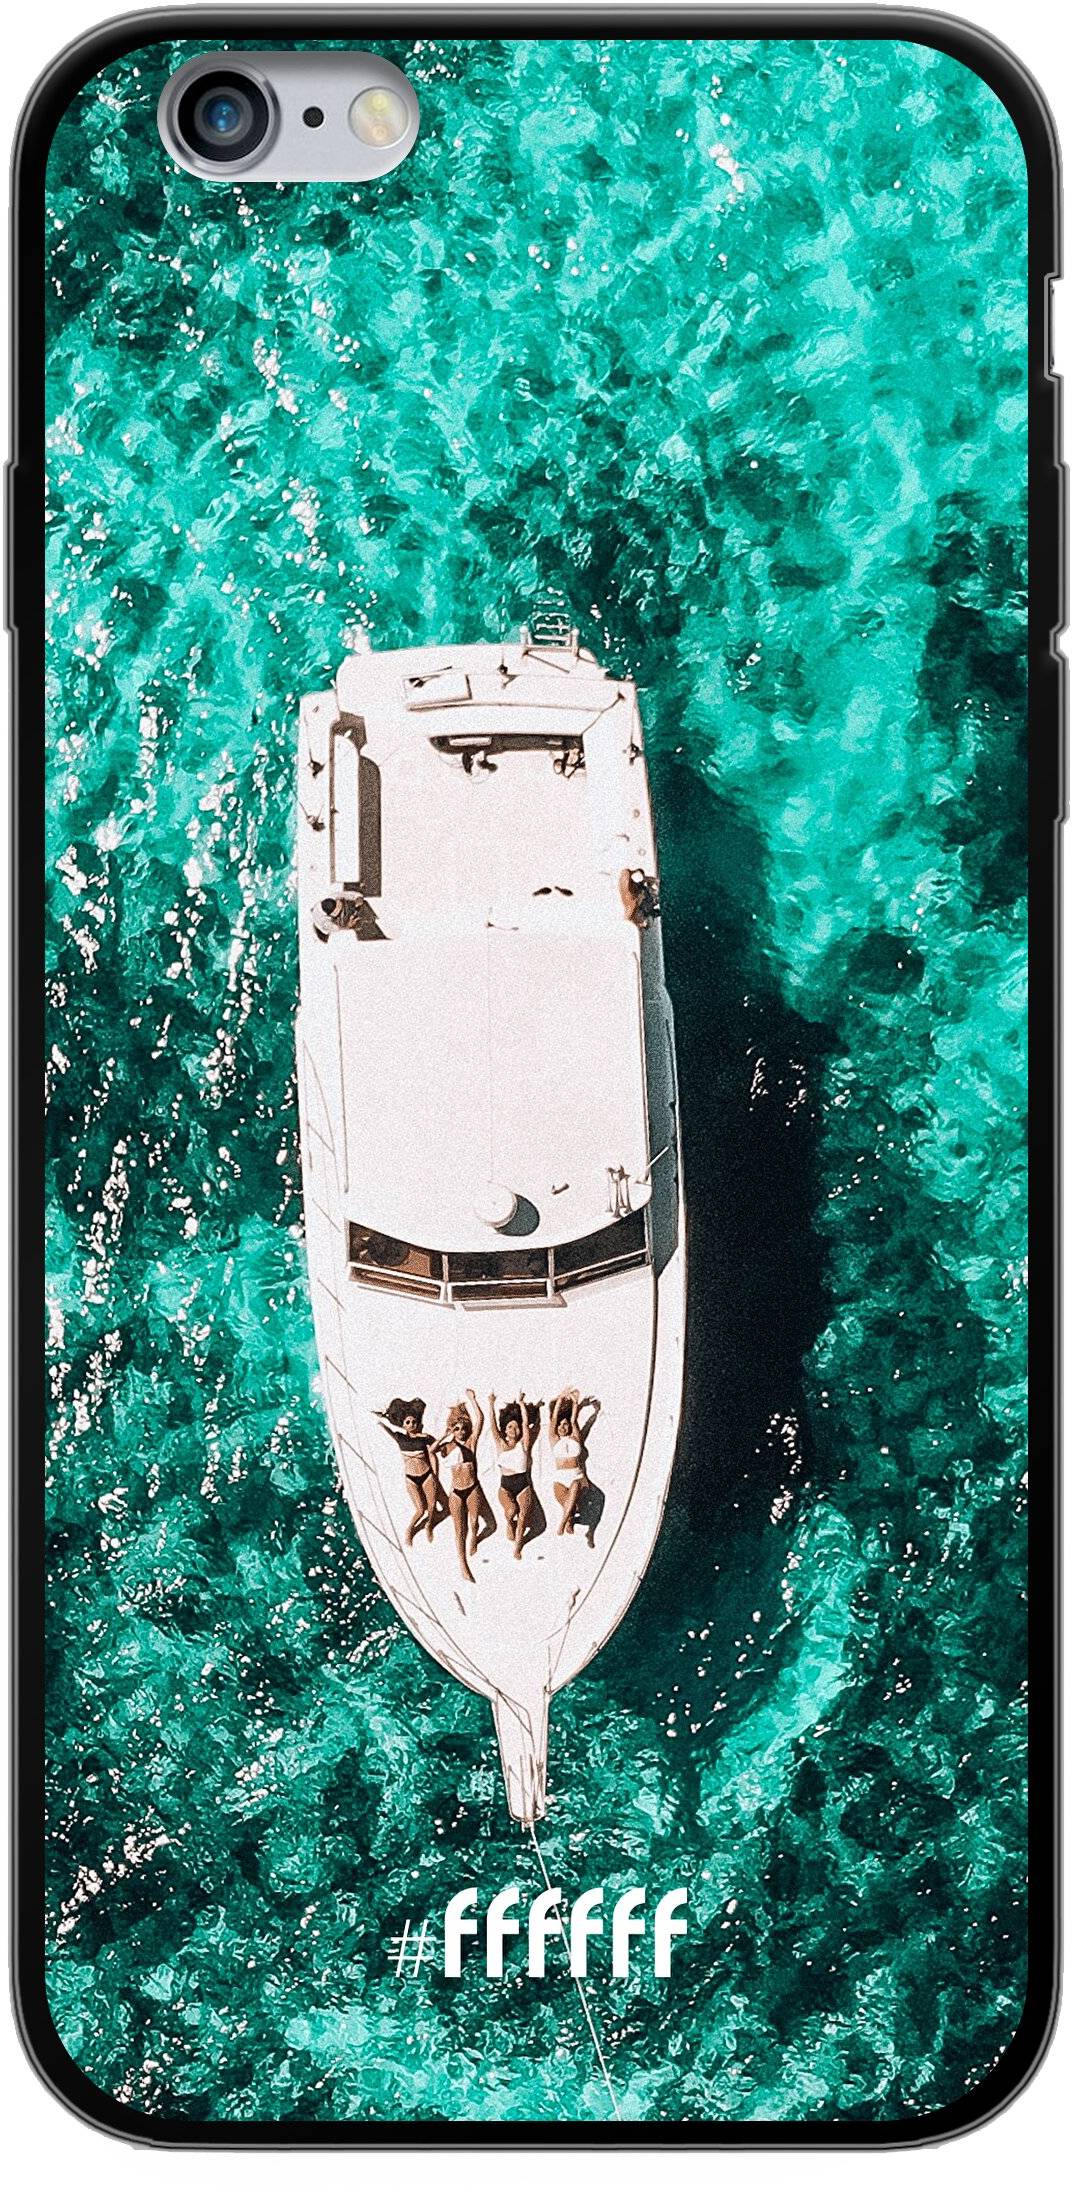 Yacht Life iPhone 6s